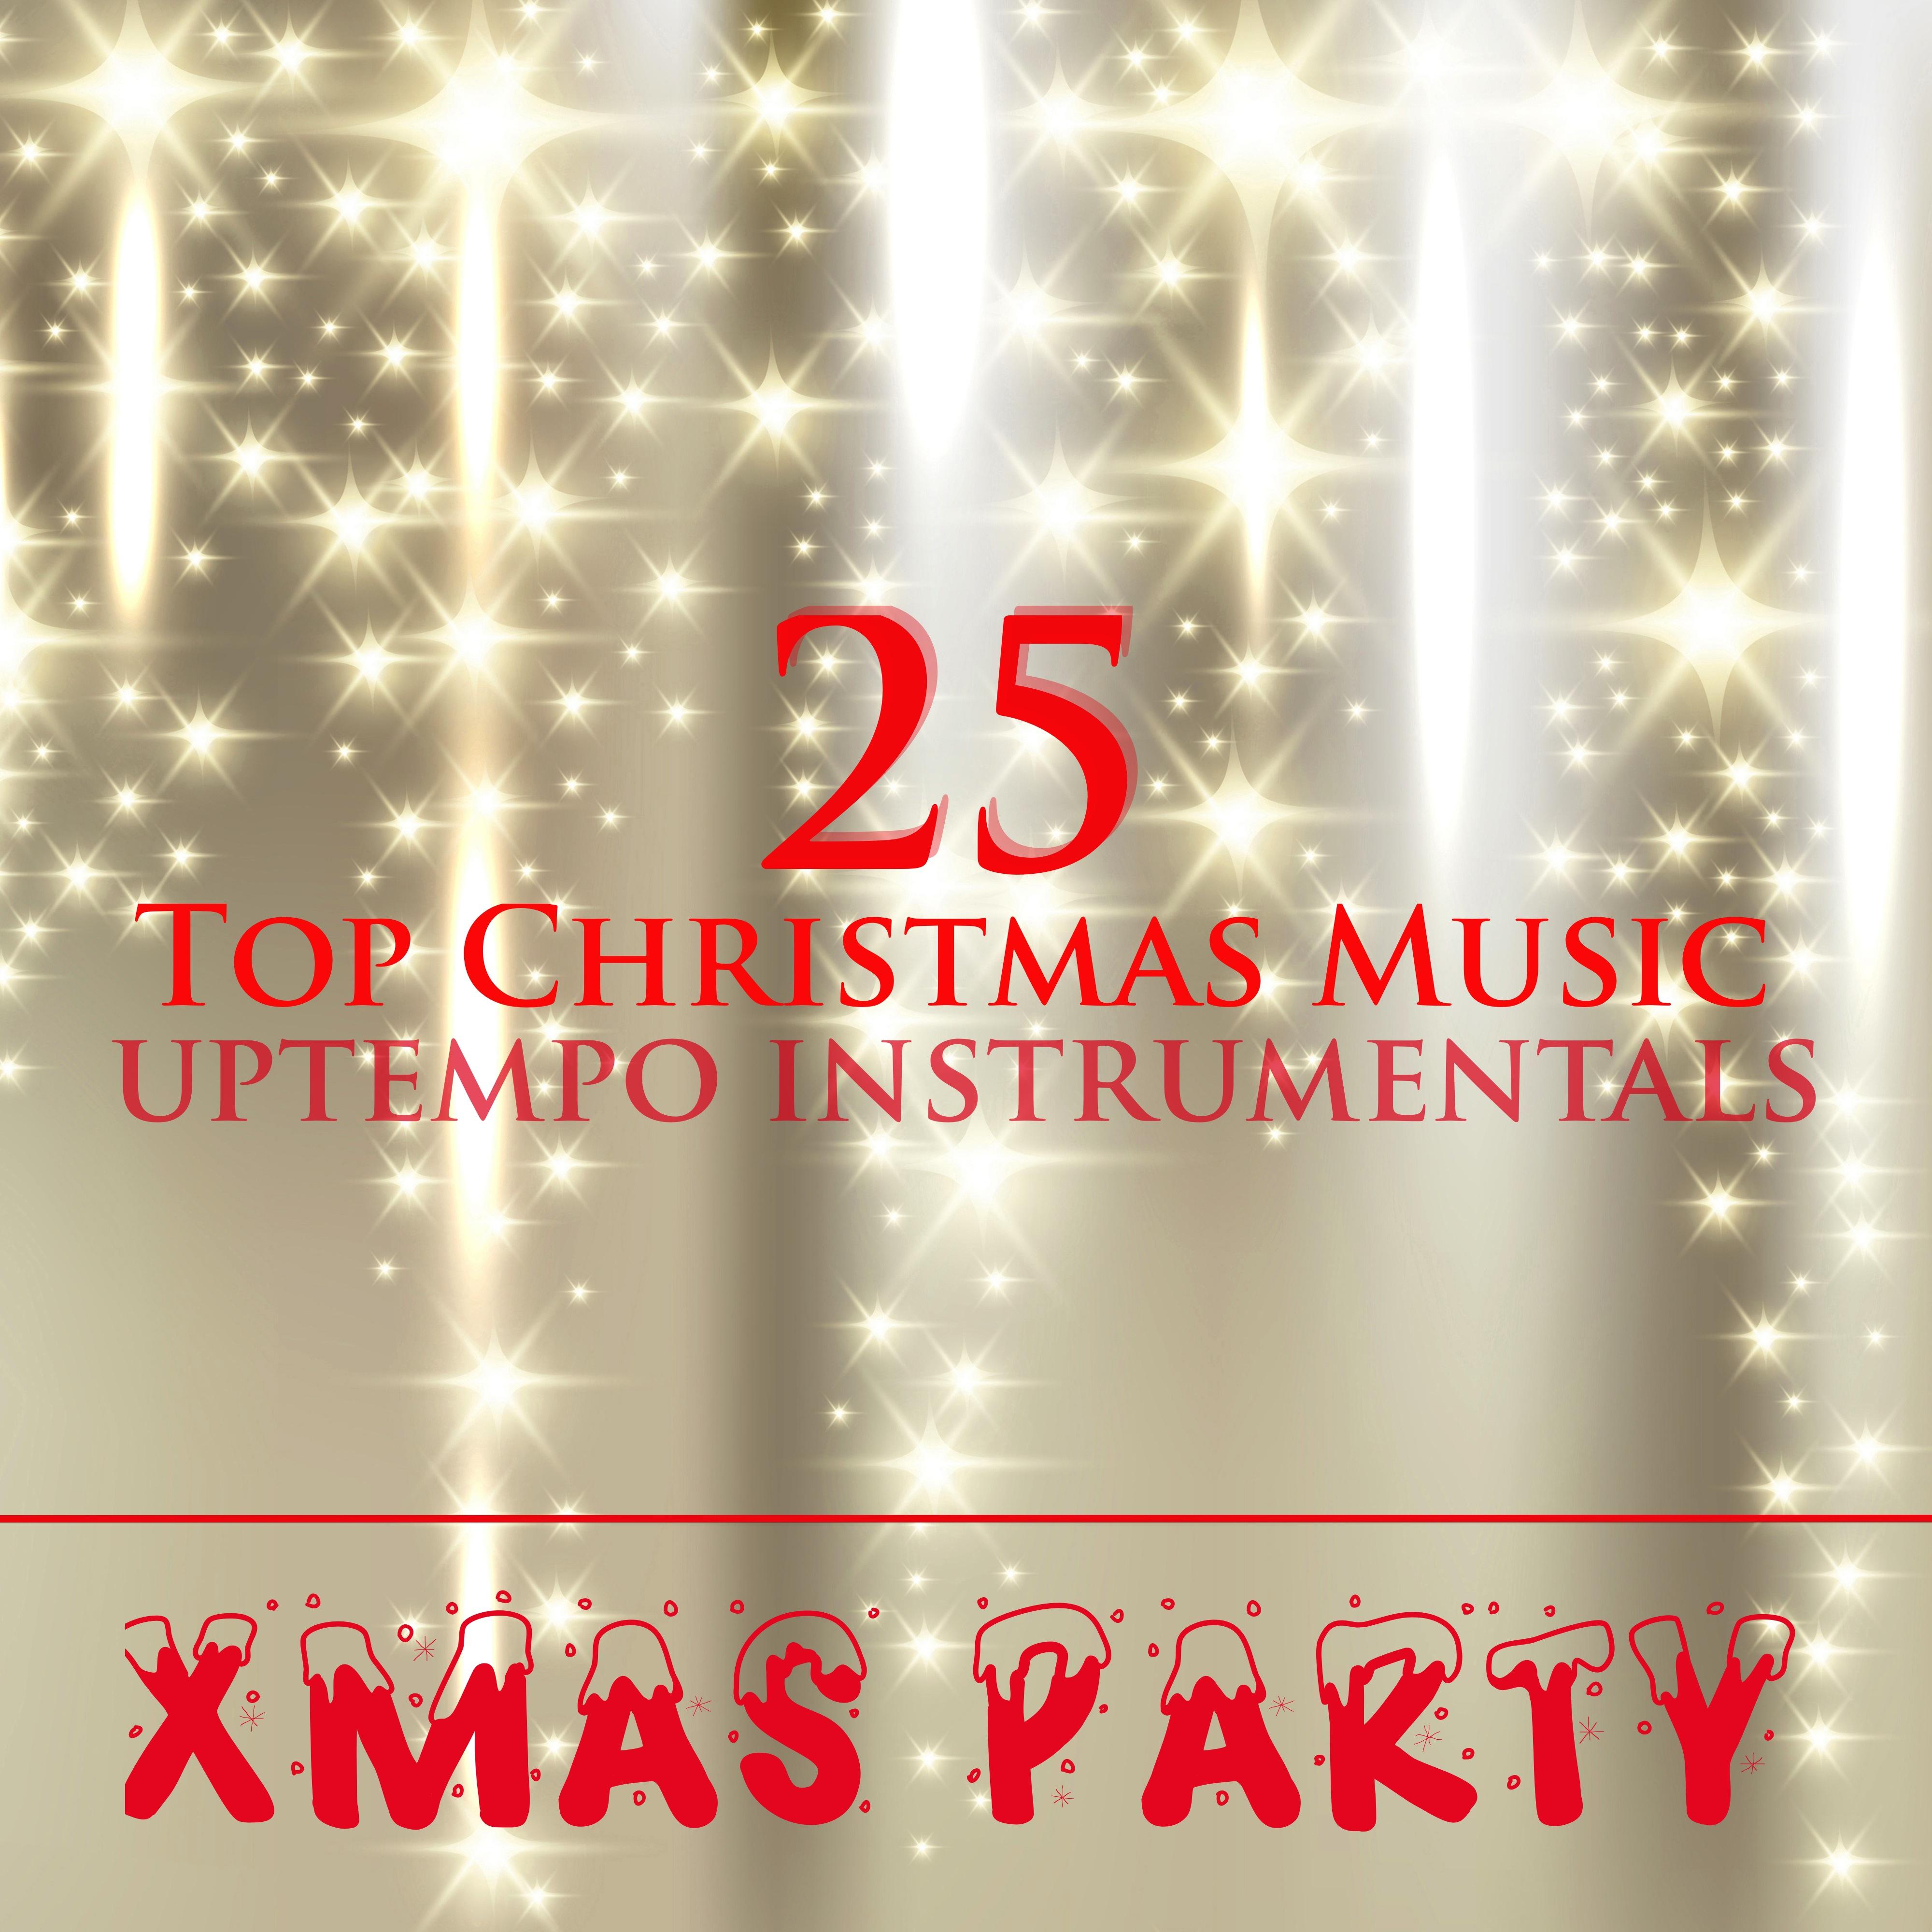 Xmas Party: 25 Top Christmas Music Uptempo Instrumentals